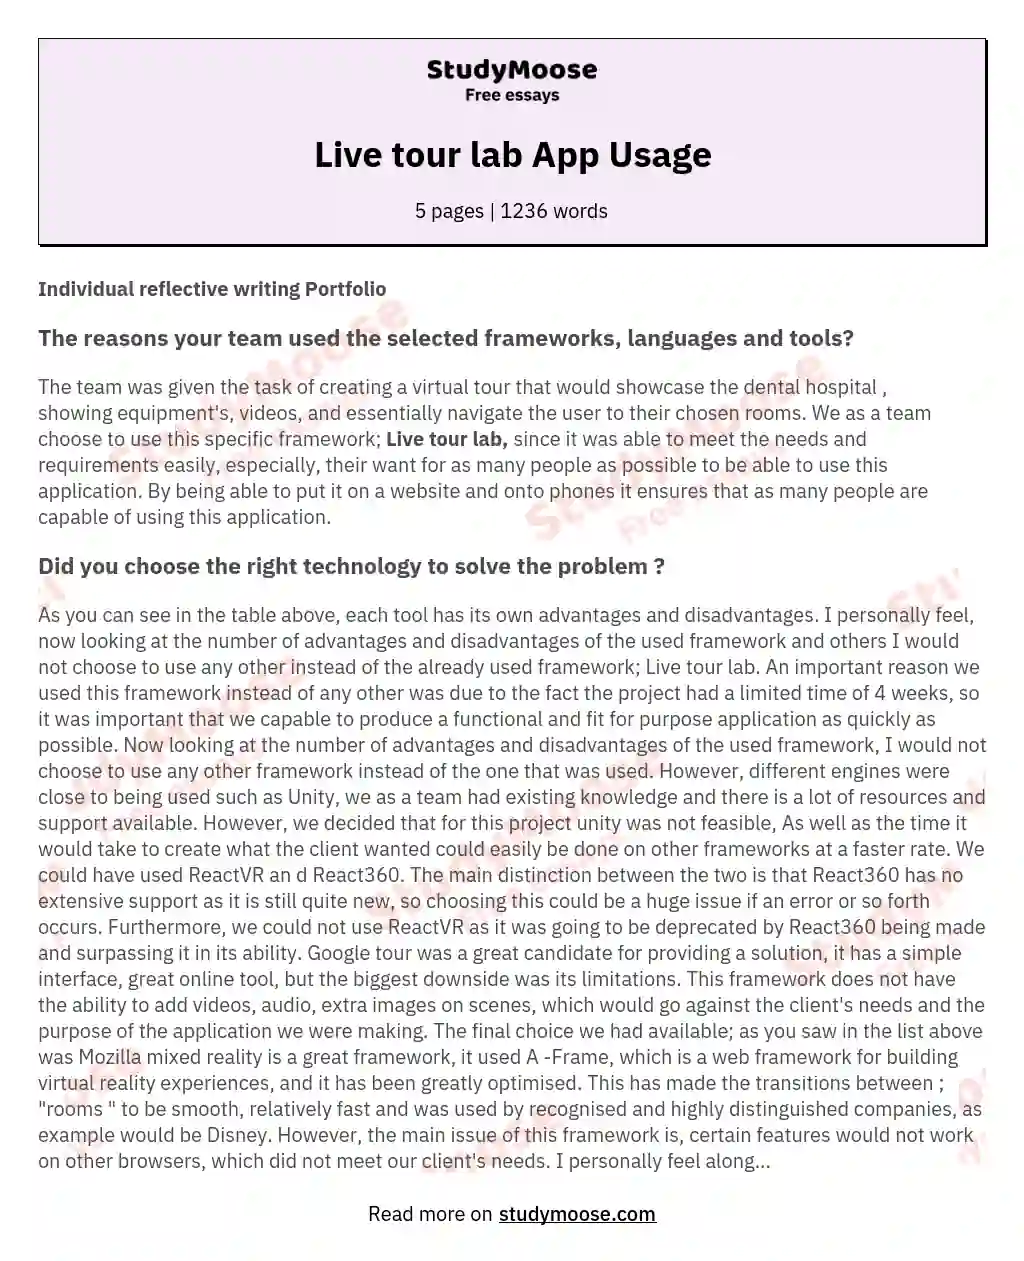 Live tour lab App Usage essay